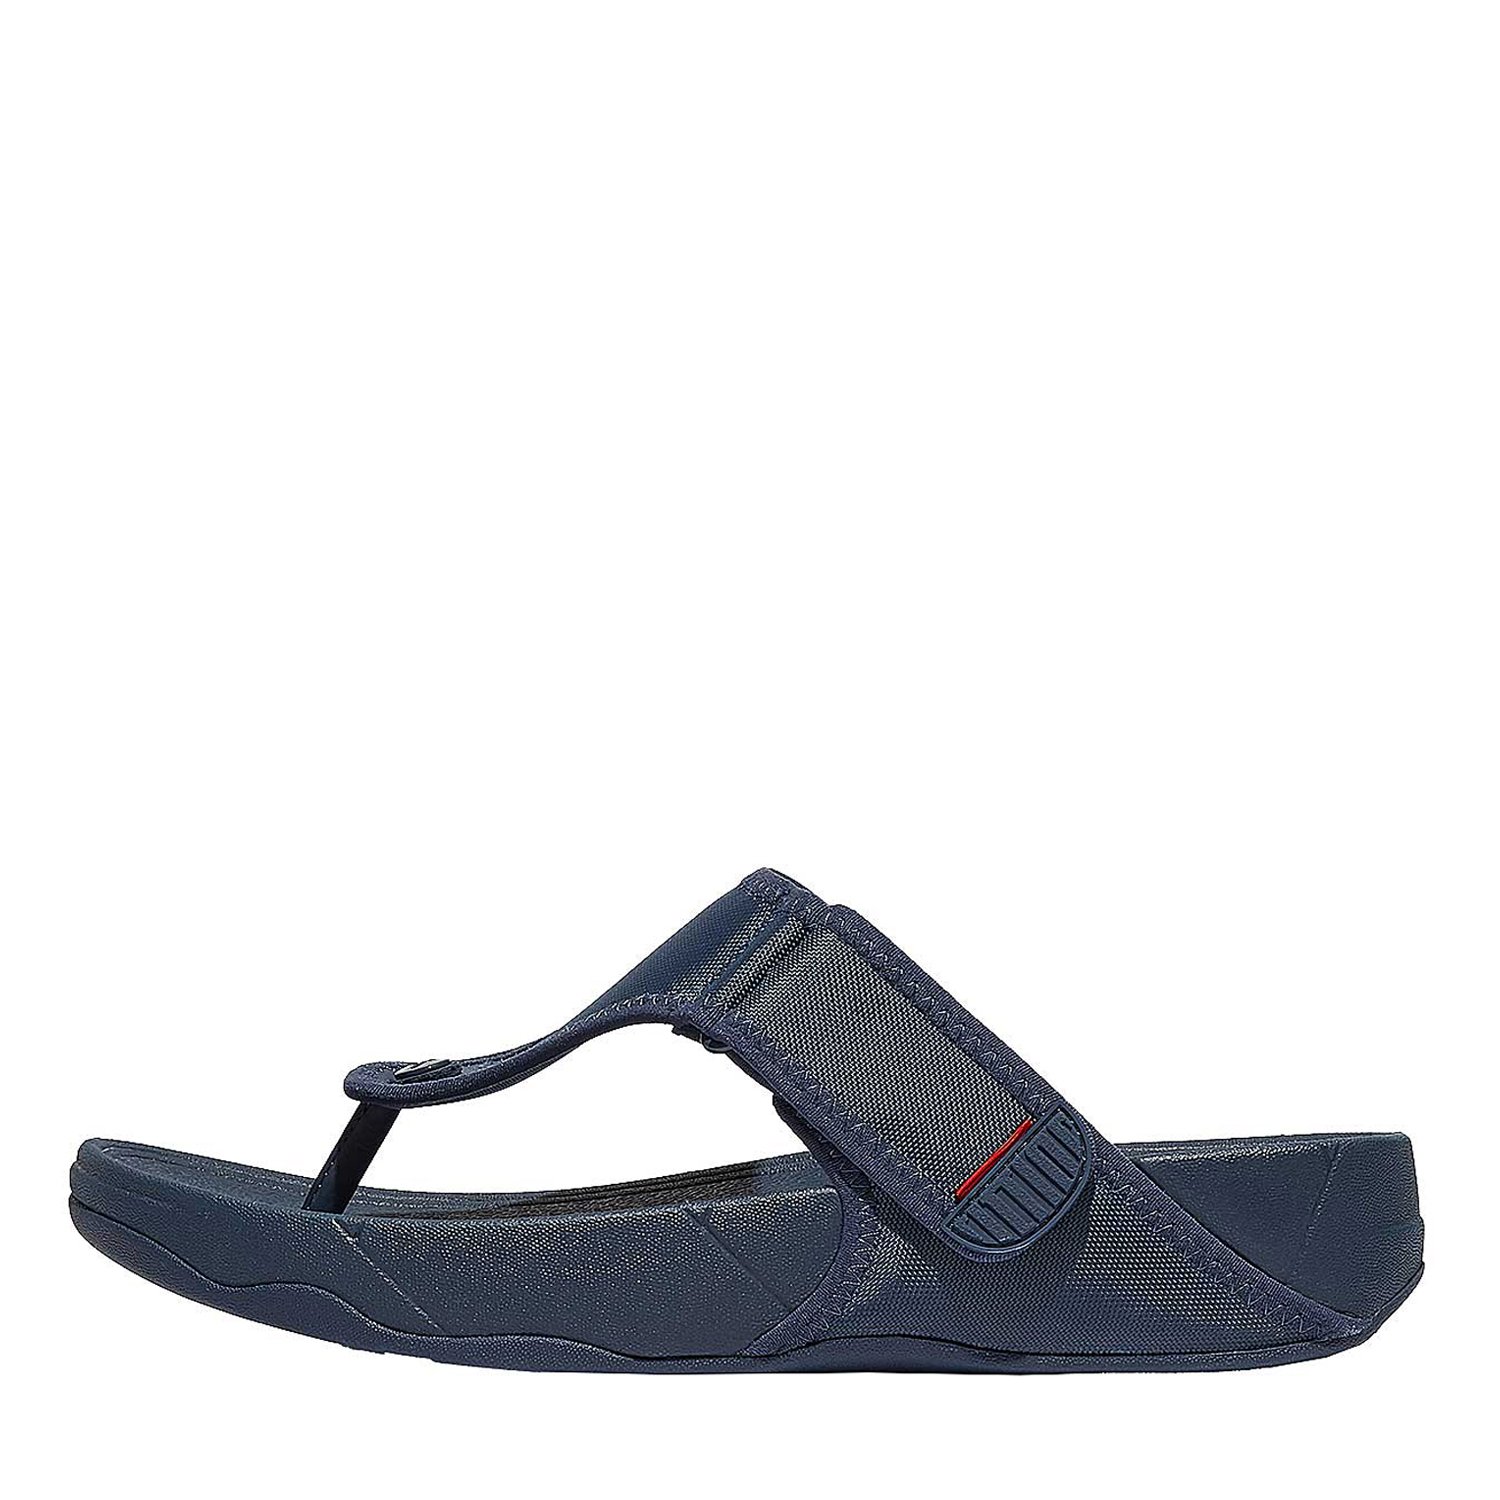 Teva Men's Pajaro Water-Resistant Sandals | CoolSprings Galleria